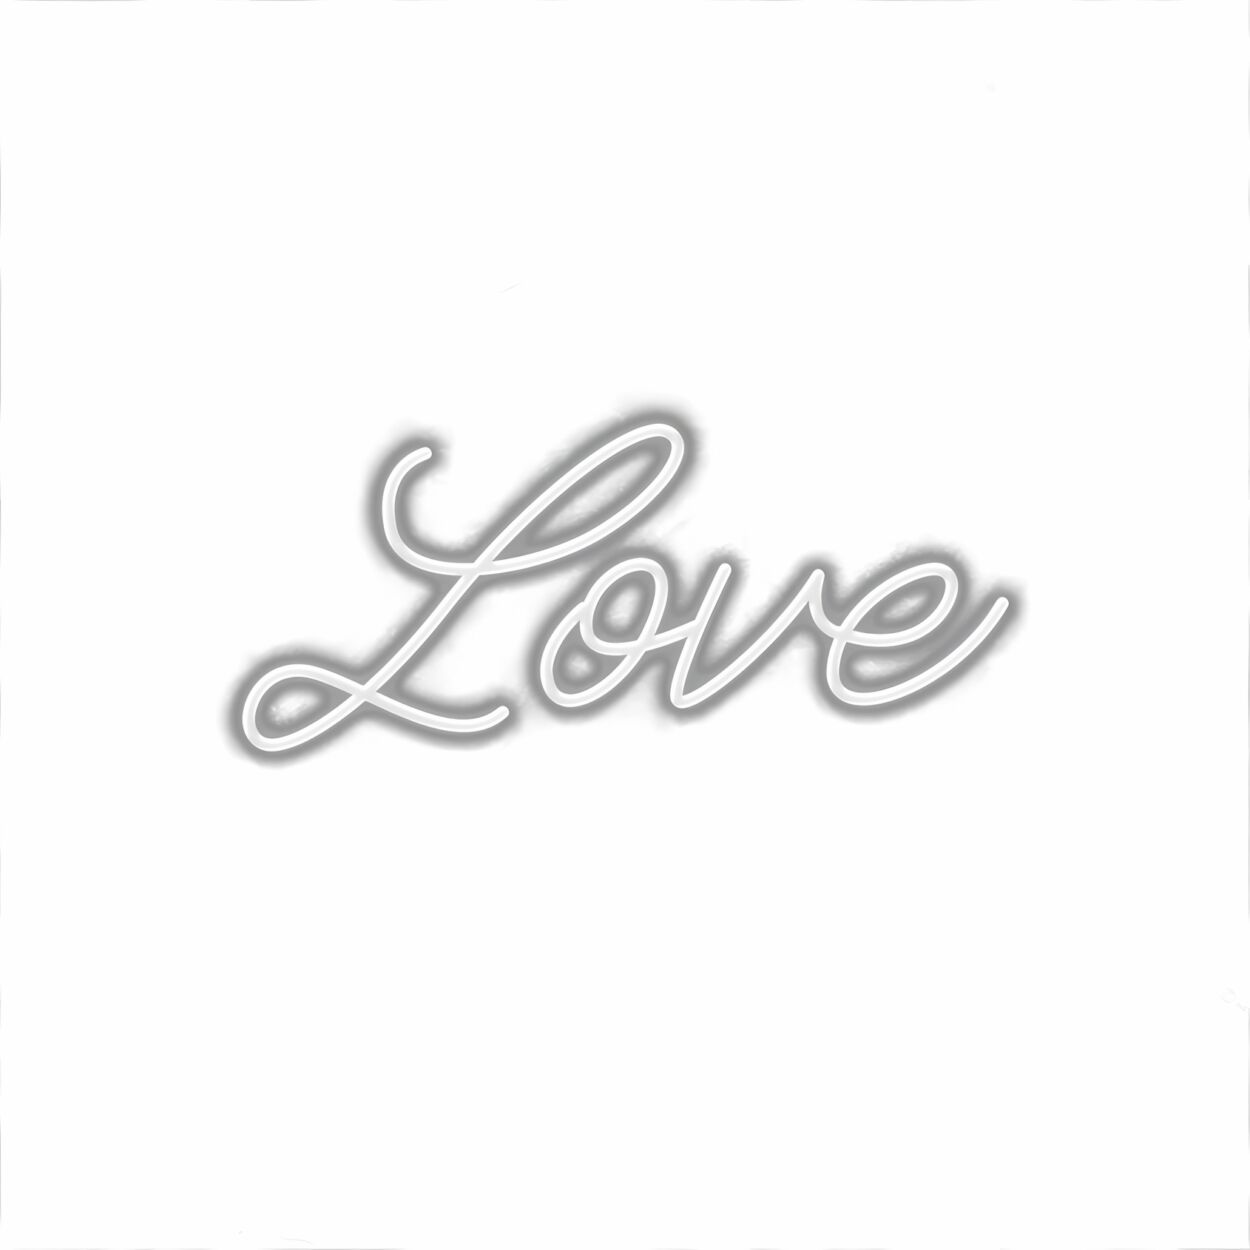 Cursive love word art on white background